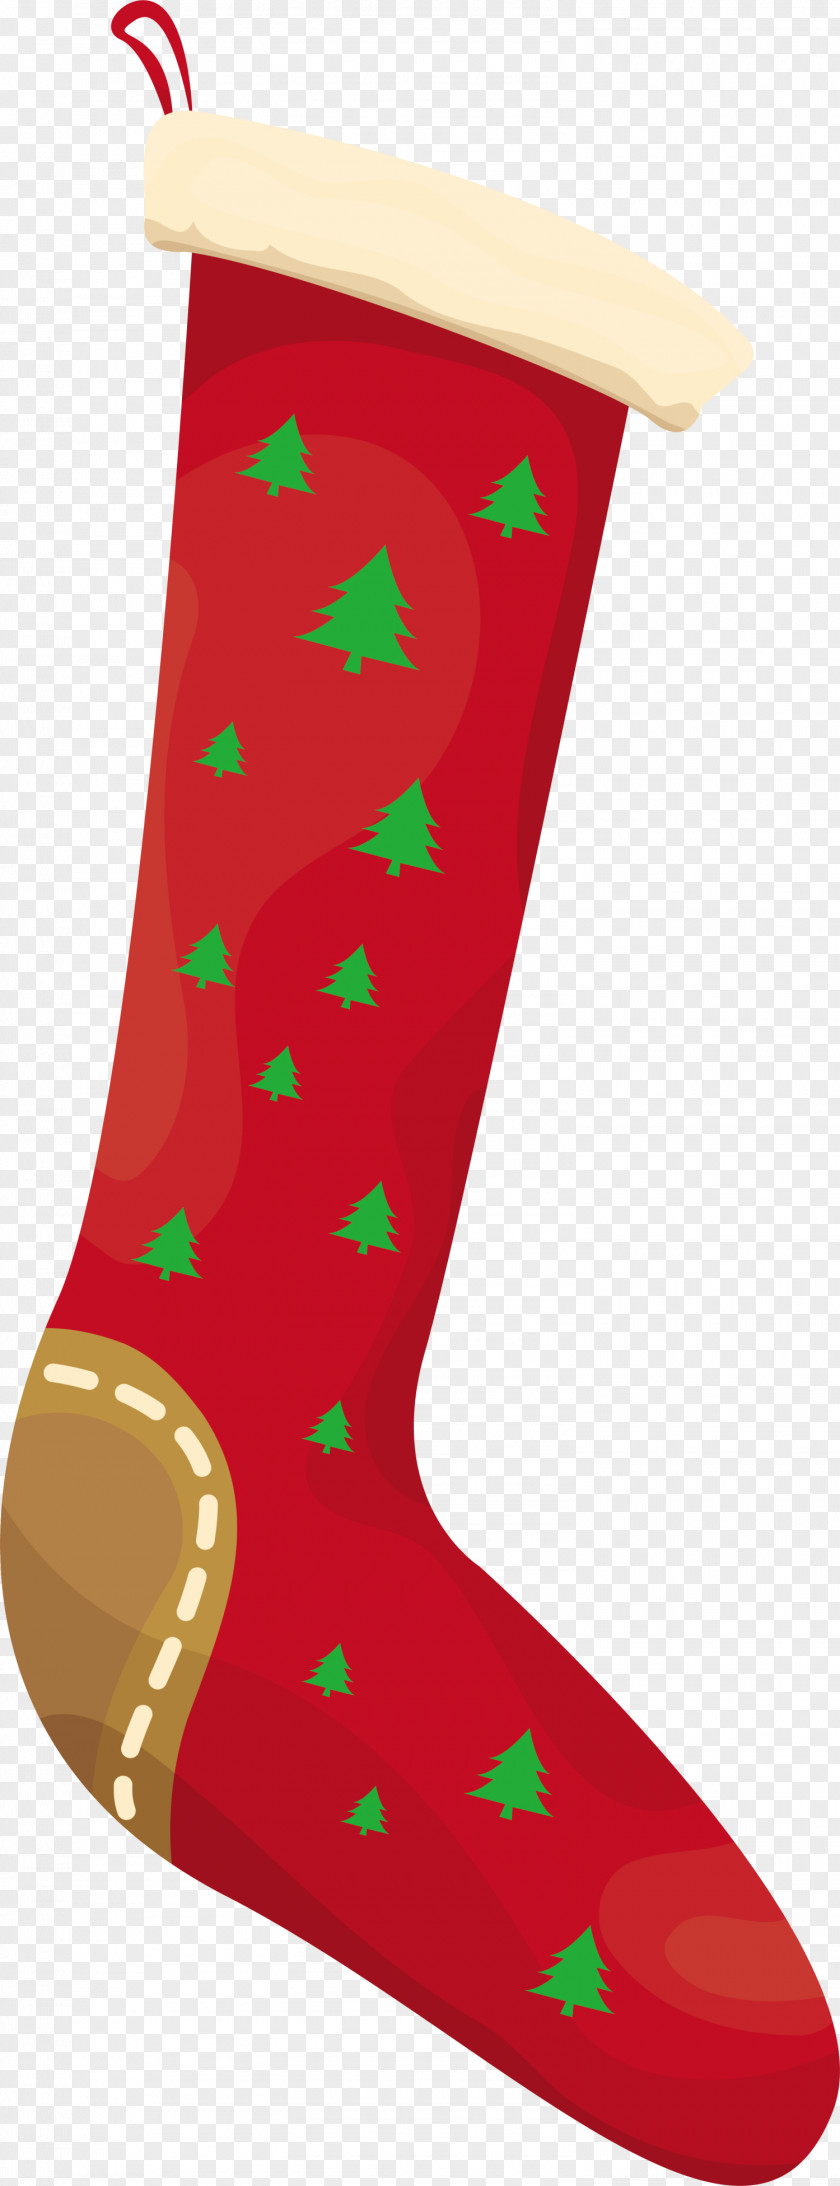 Green Christmas Tree Socks Stockings Red PNG